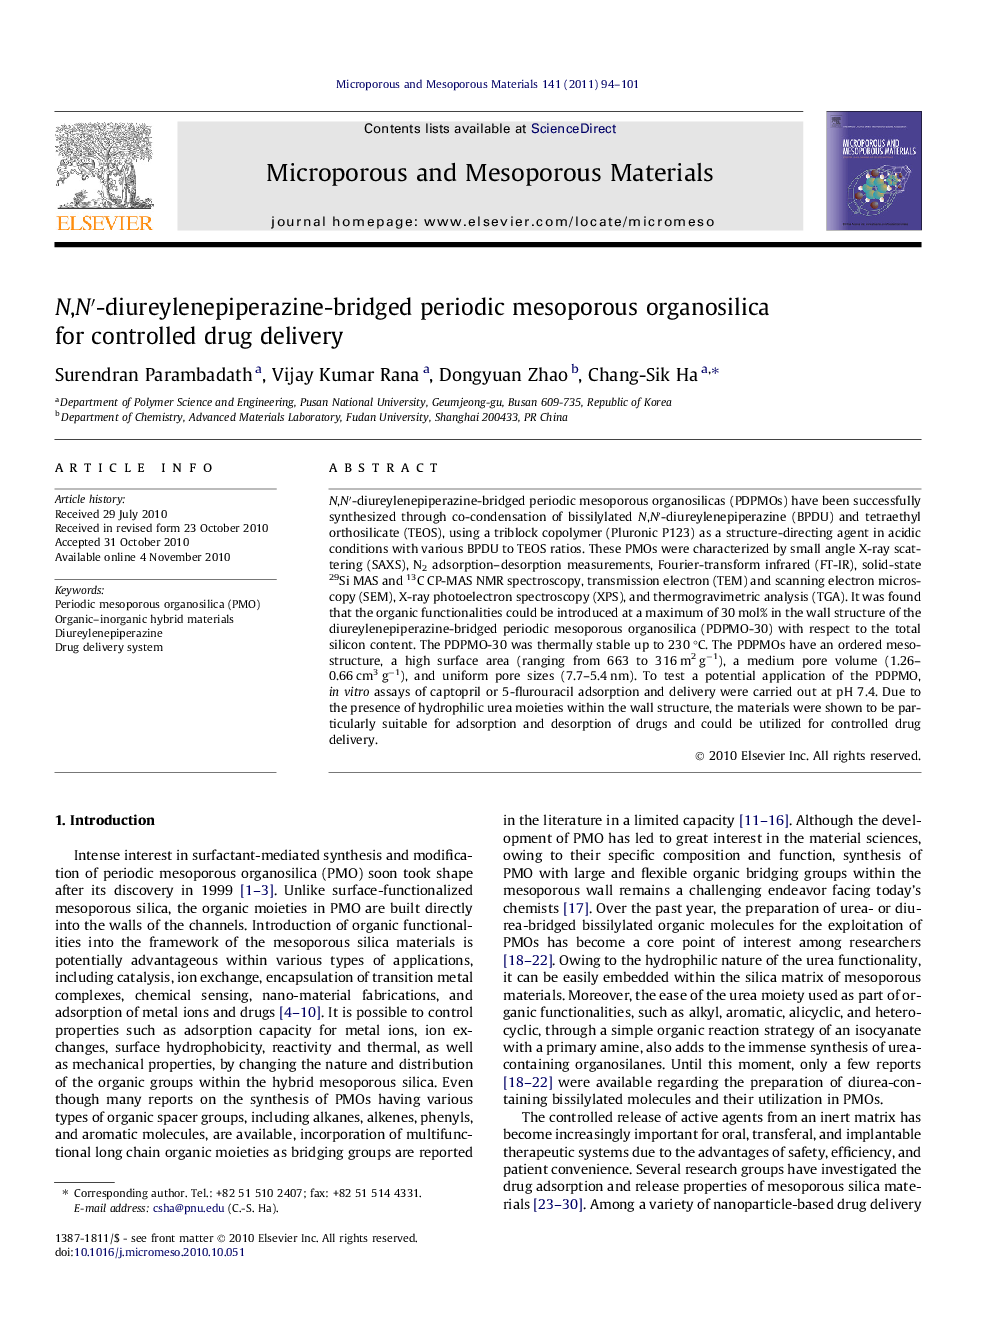 N,N′-diureylenepiperazine-bridged periodic mesoporous organosilica for controlled drug delivery